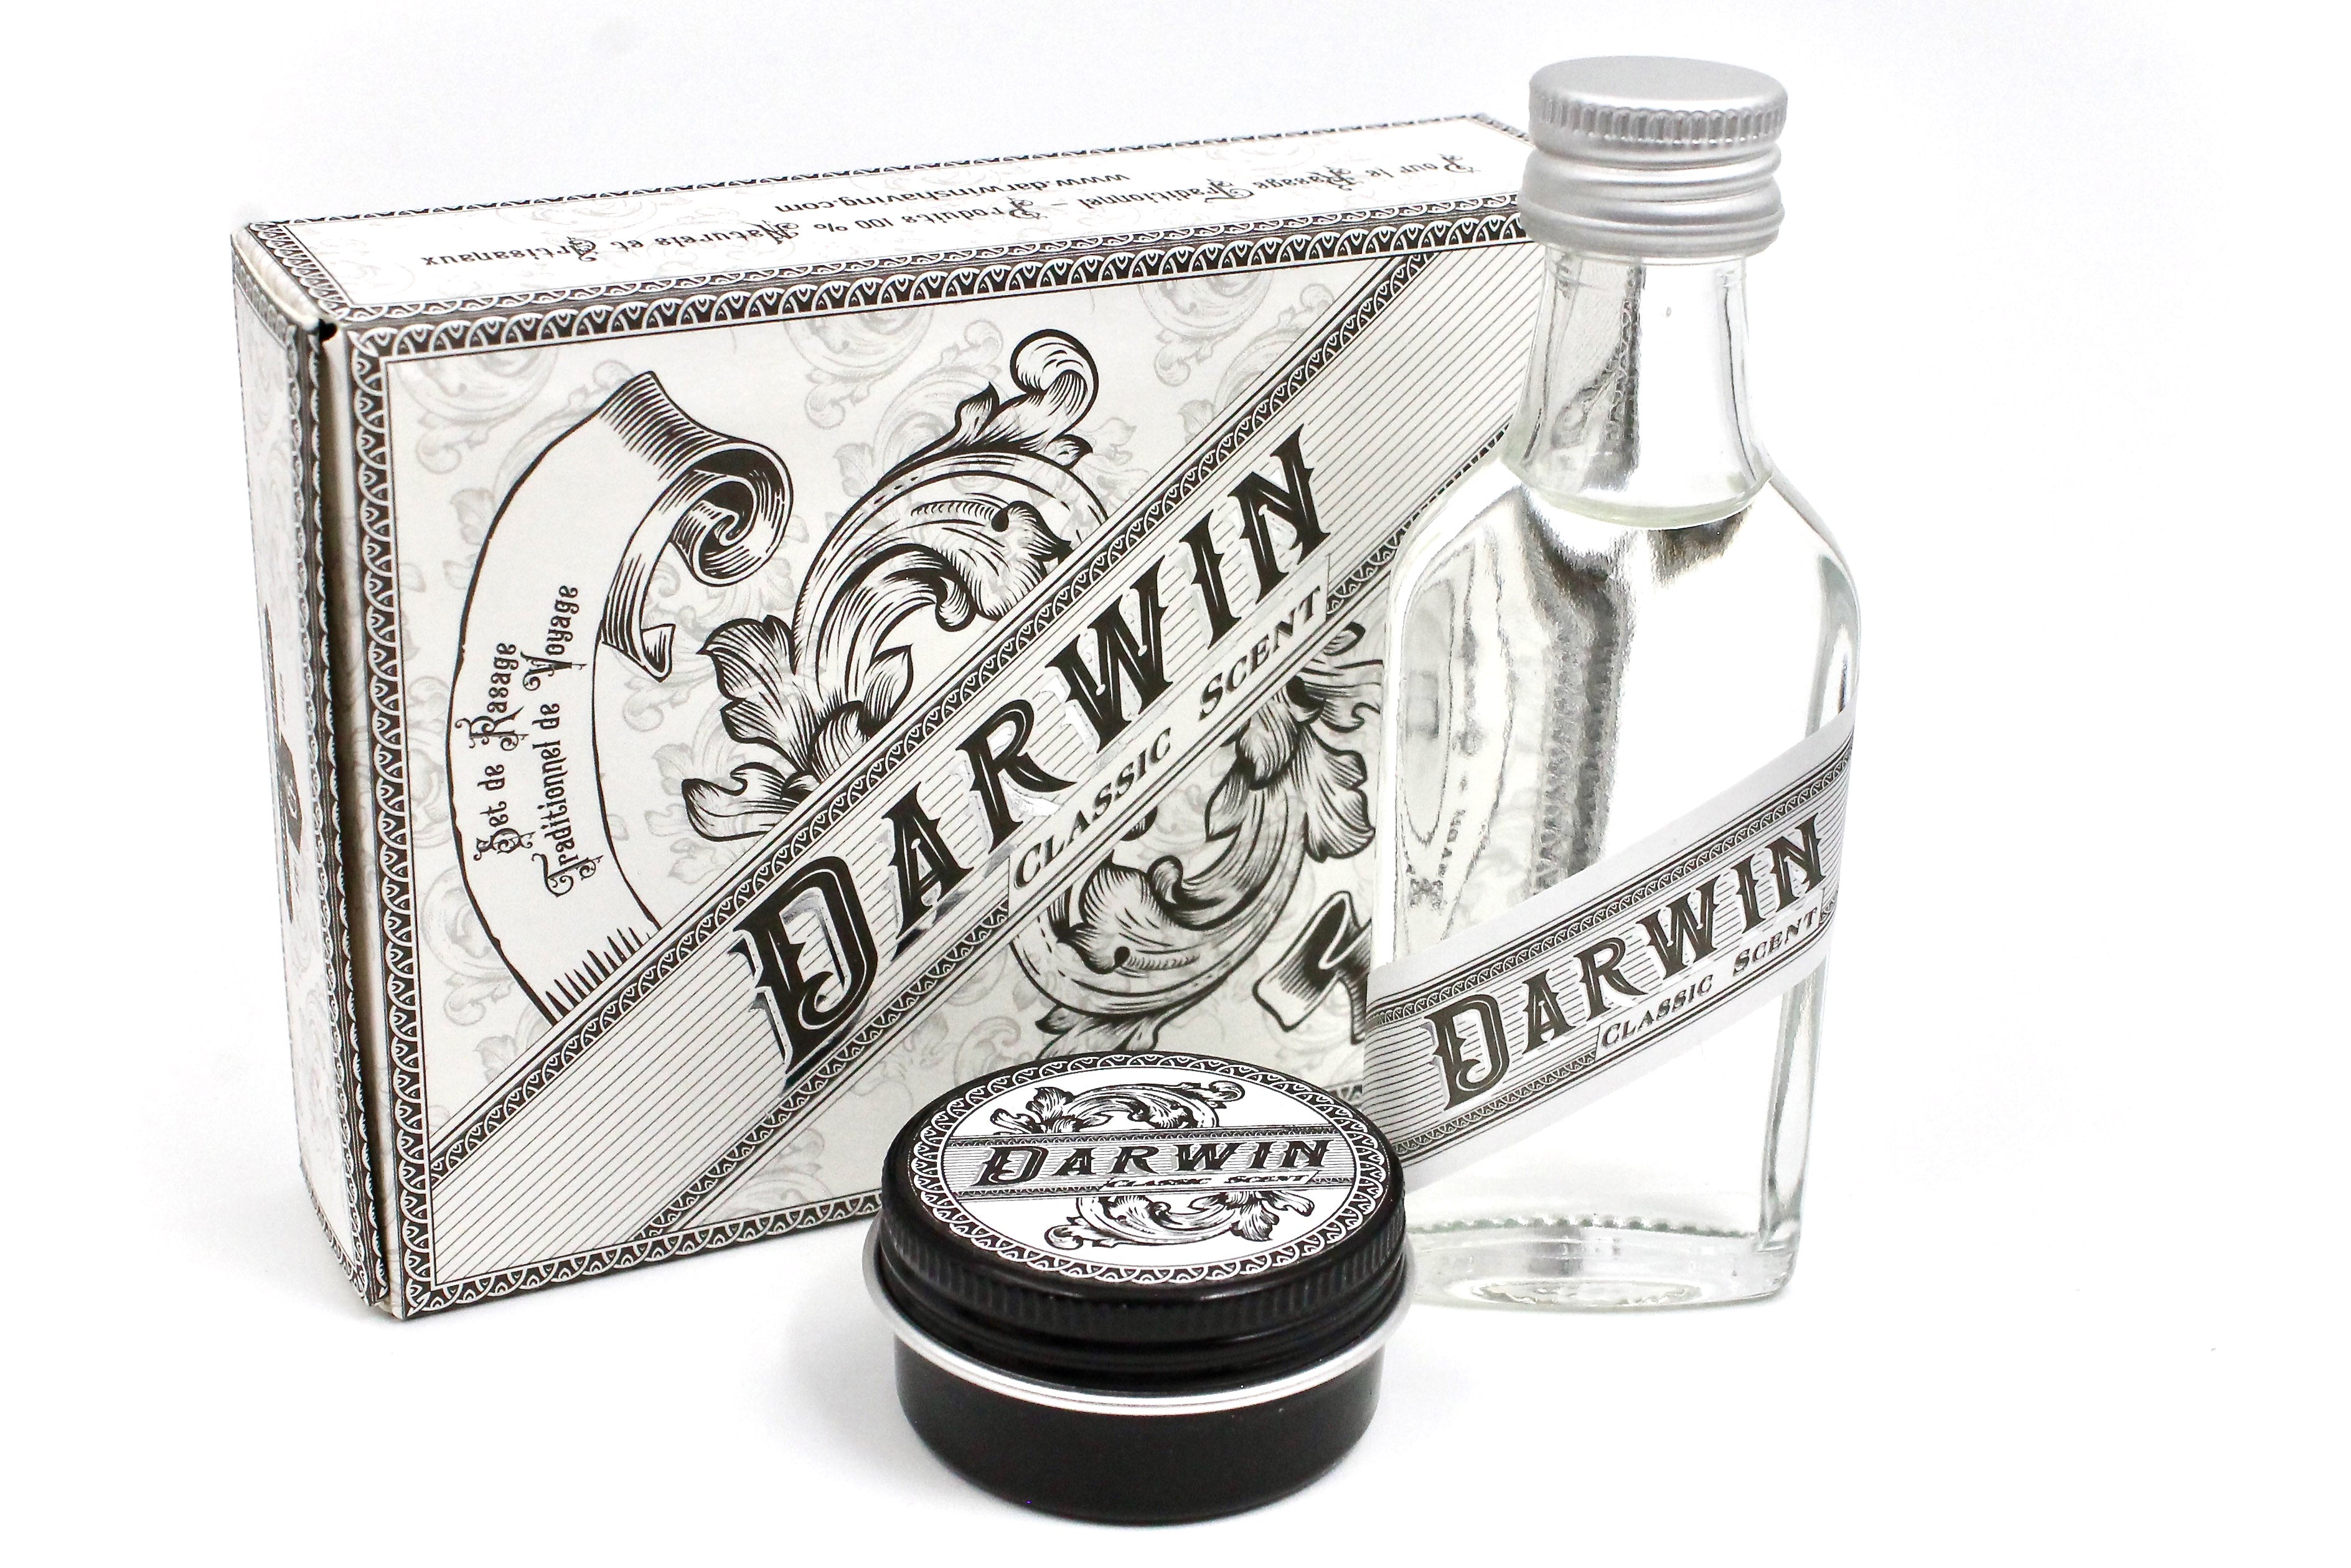 Darwin "Classic" Travel Shaving Set - 15g Shaving Soap + 20ml Aftershave